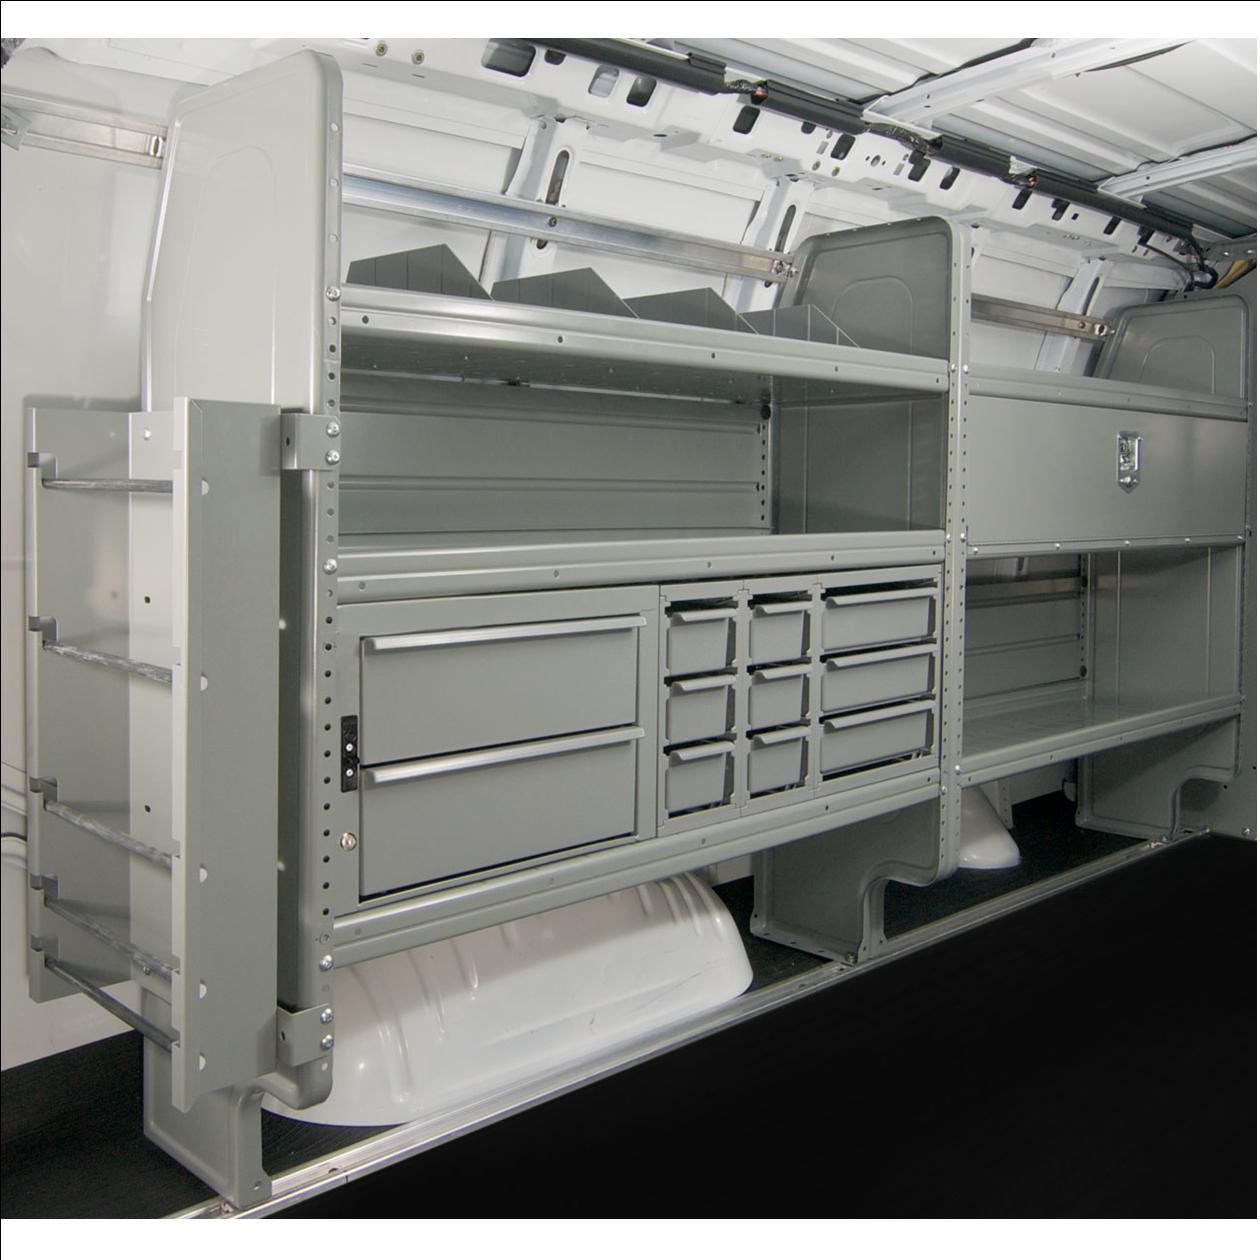 Electric Gas Appliance Repair, Shelves For Cargo Vans